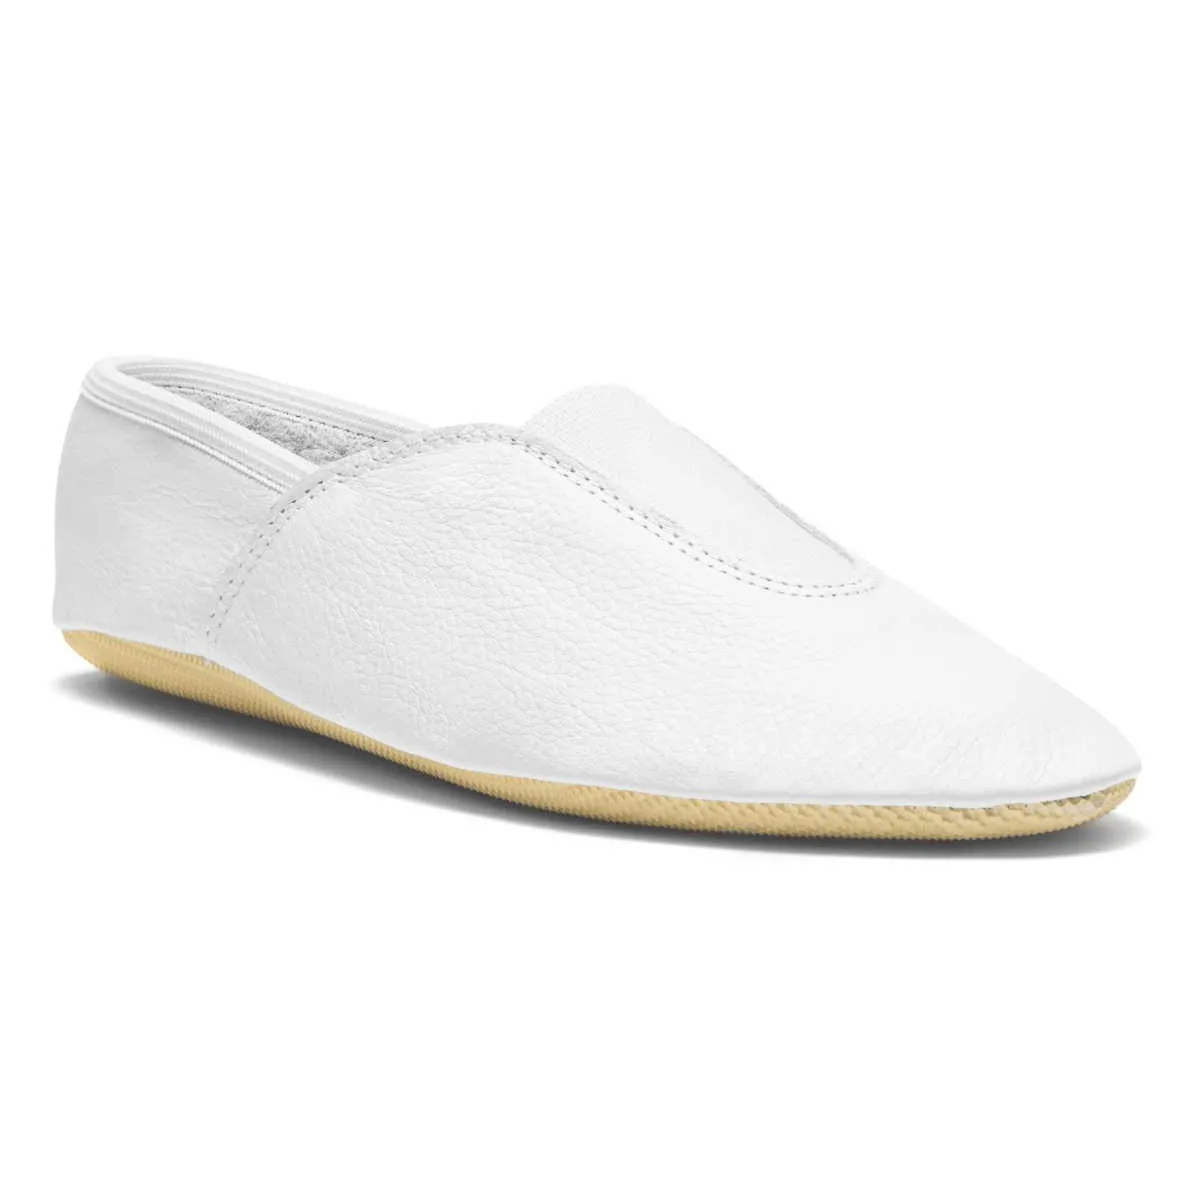 Zapatillas gimnasia blanco - zapatillas esterilla zapatillas pies descalzos